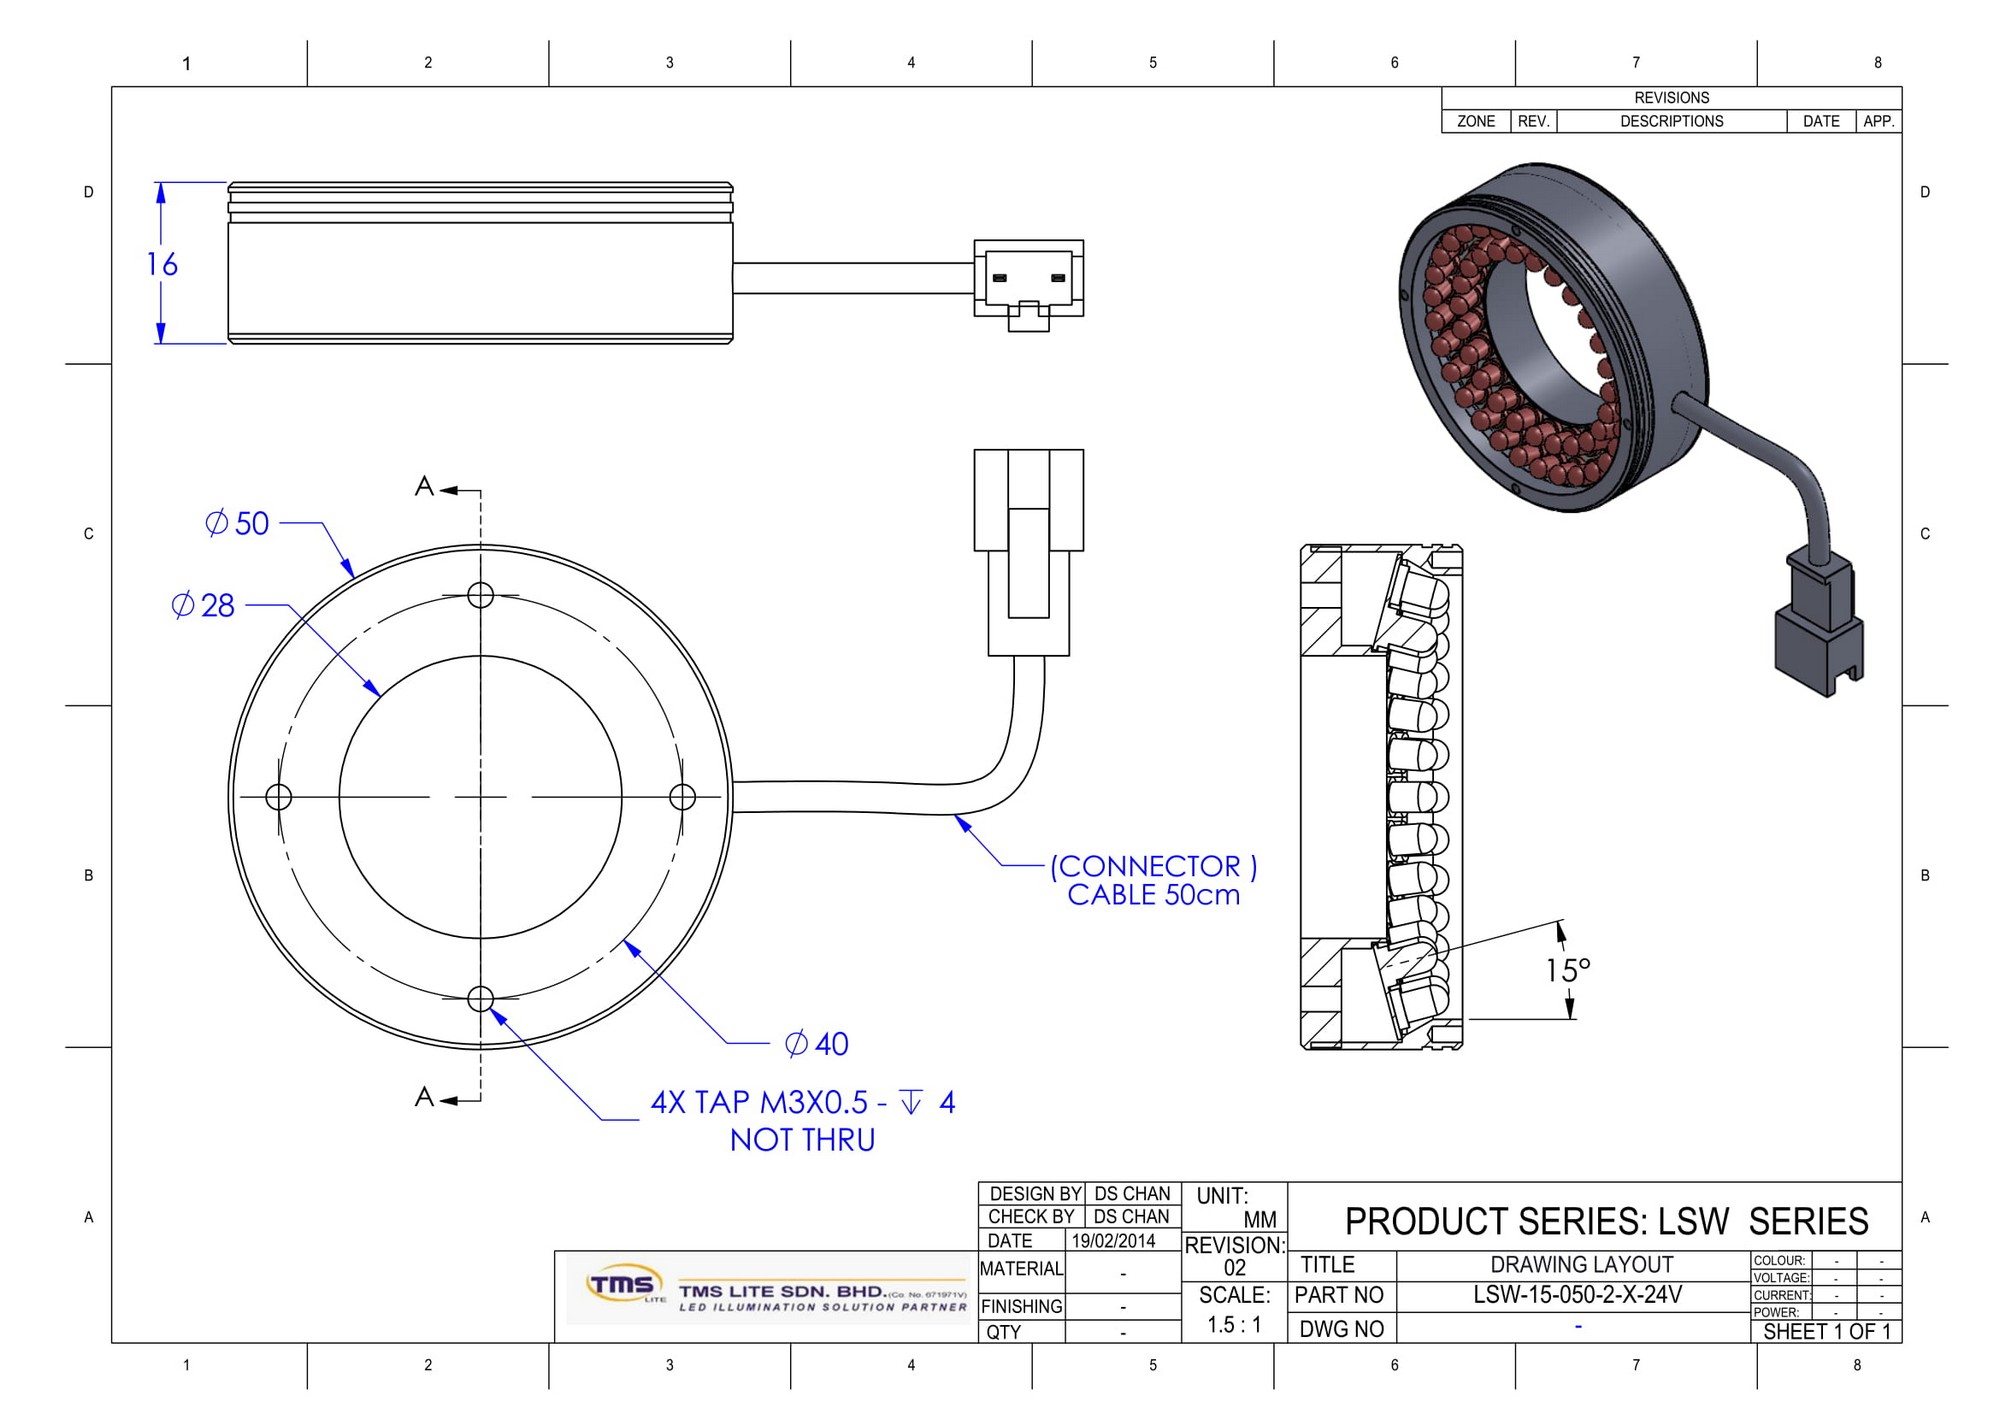 tekening schematische opbouw LSW-15-050-2-W-24V